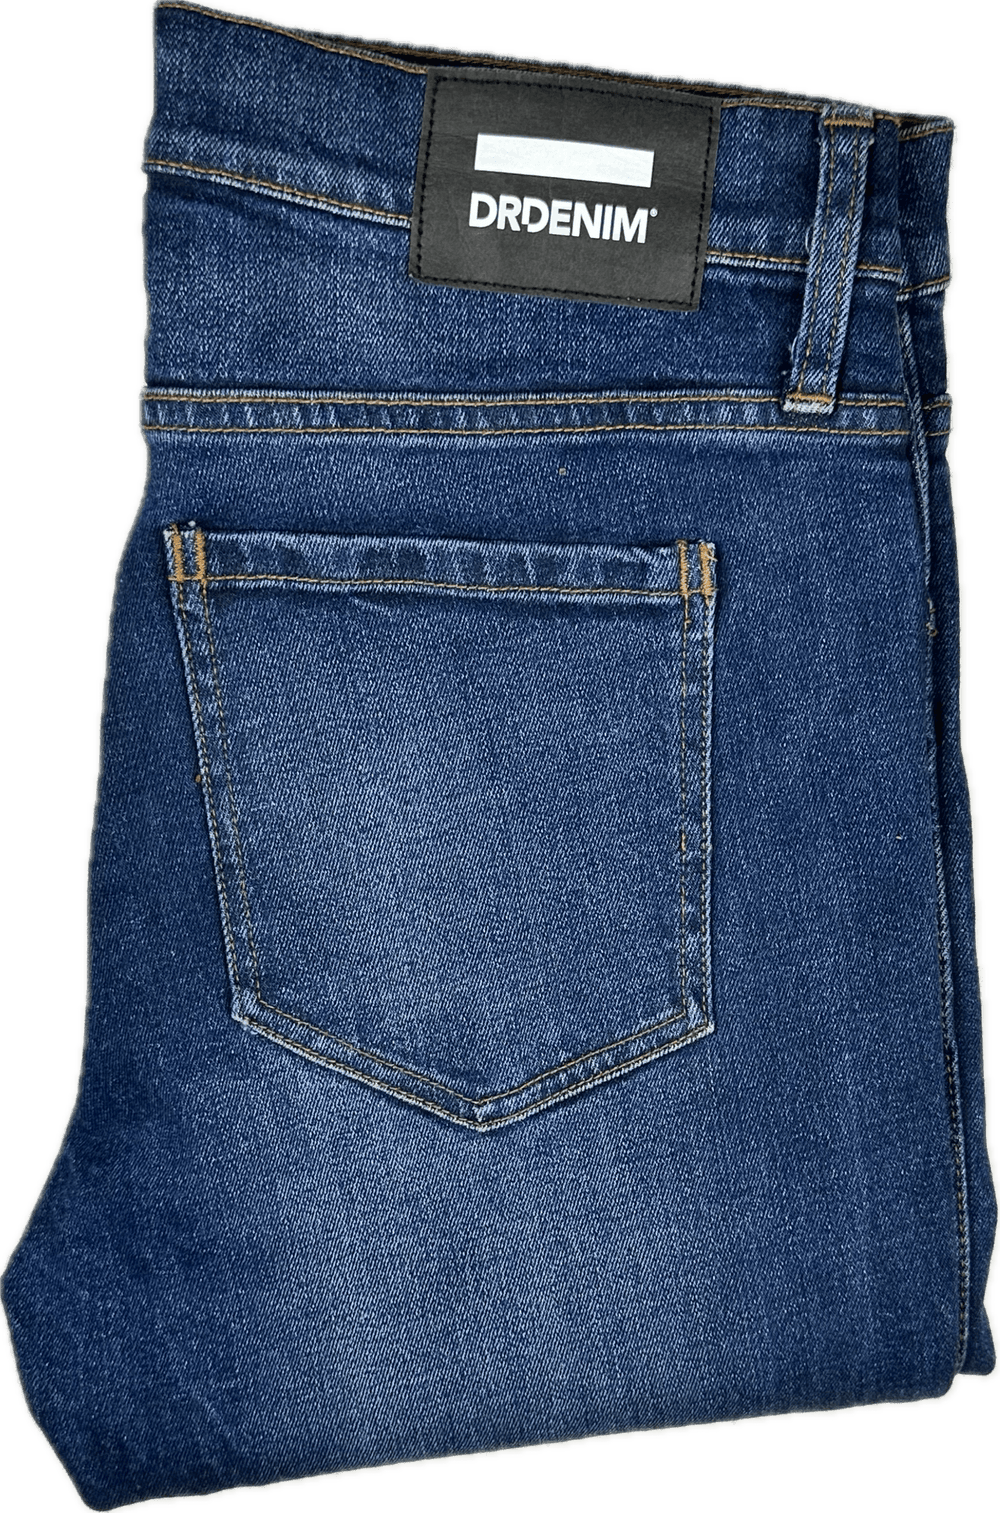 Dr Denim 'Snap' Dark Blue Slim Fit Jeans - Size 33/32 - Jean Pool